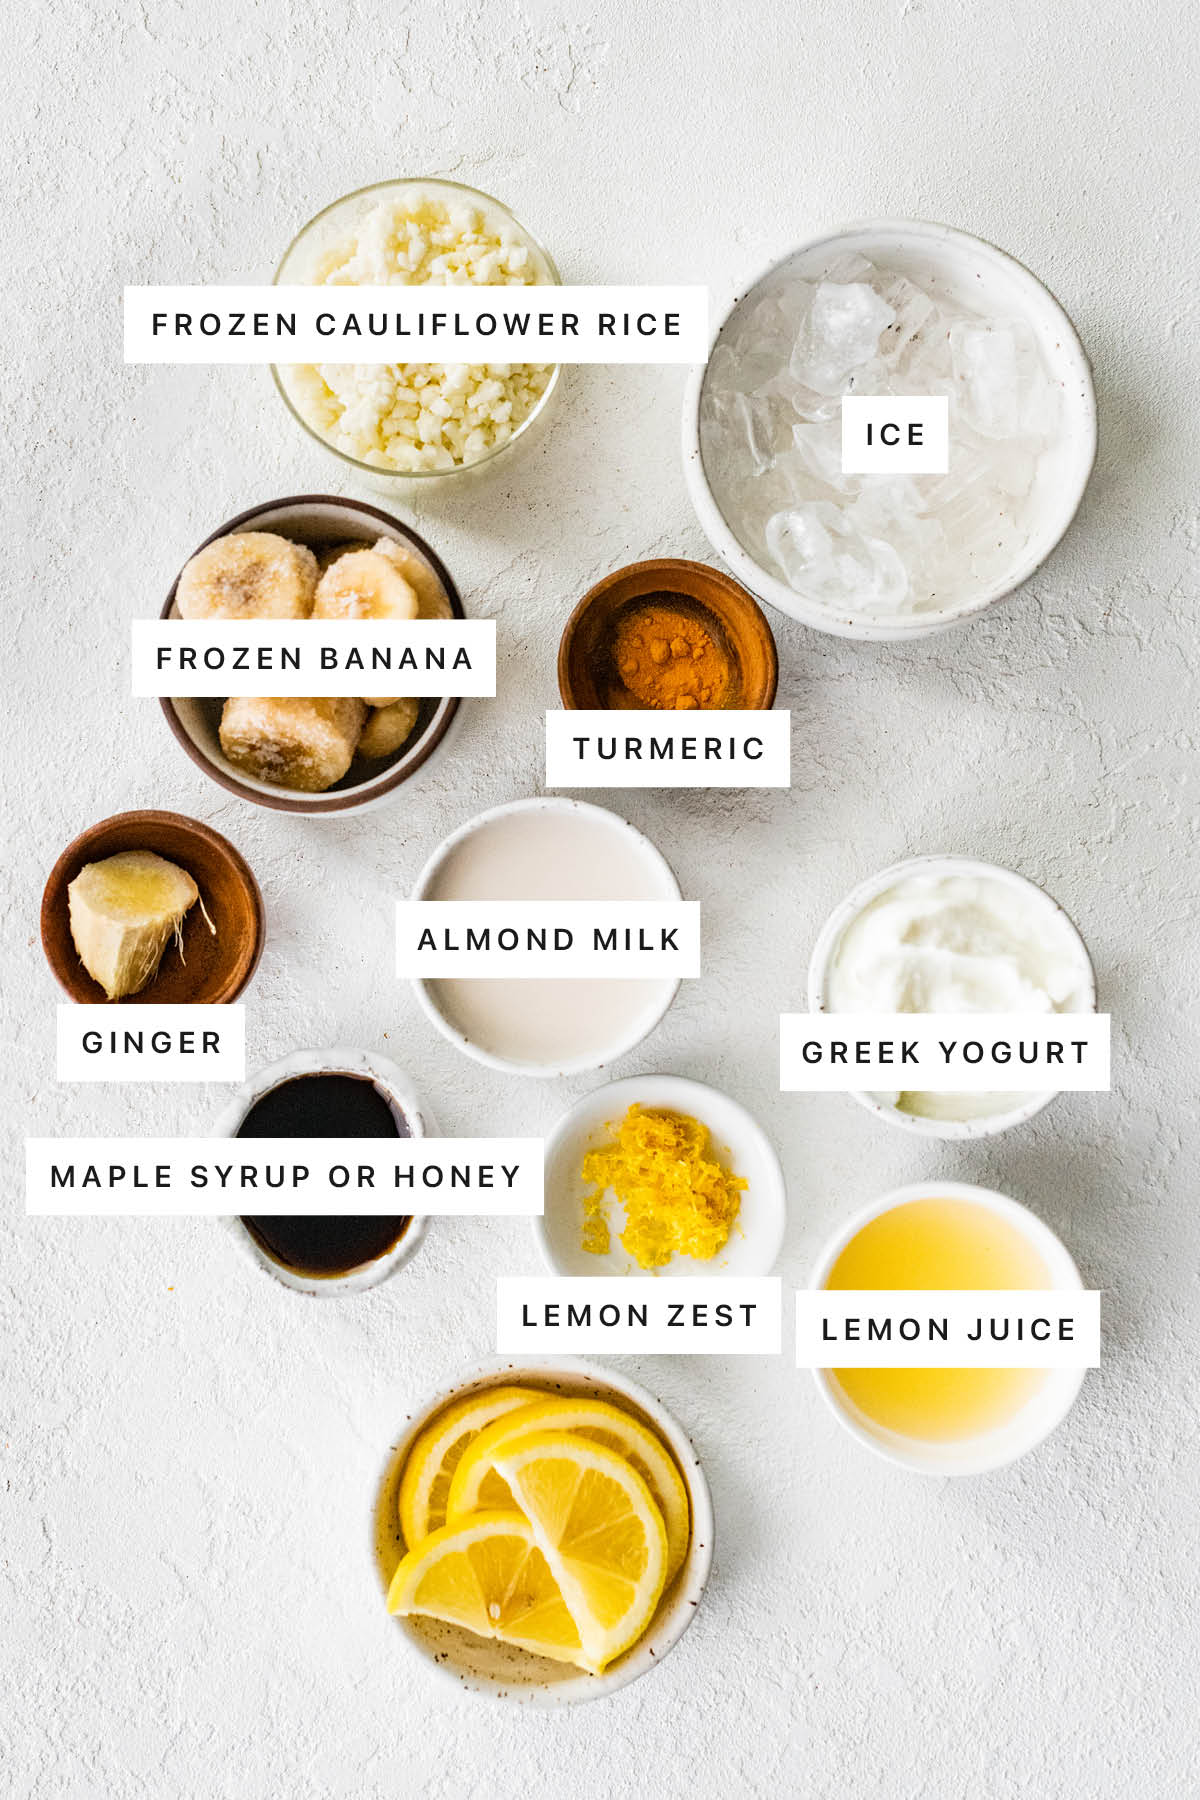 Ingredients measured out to make a Lemon Smoothie: frozen cauliflower rice, ice, frozen banana, turmeric, ginger, almond milk, Greek yogurt, maple syrup, lemon zest and lemon juice.